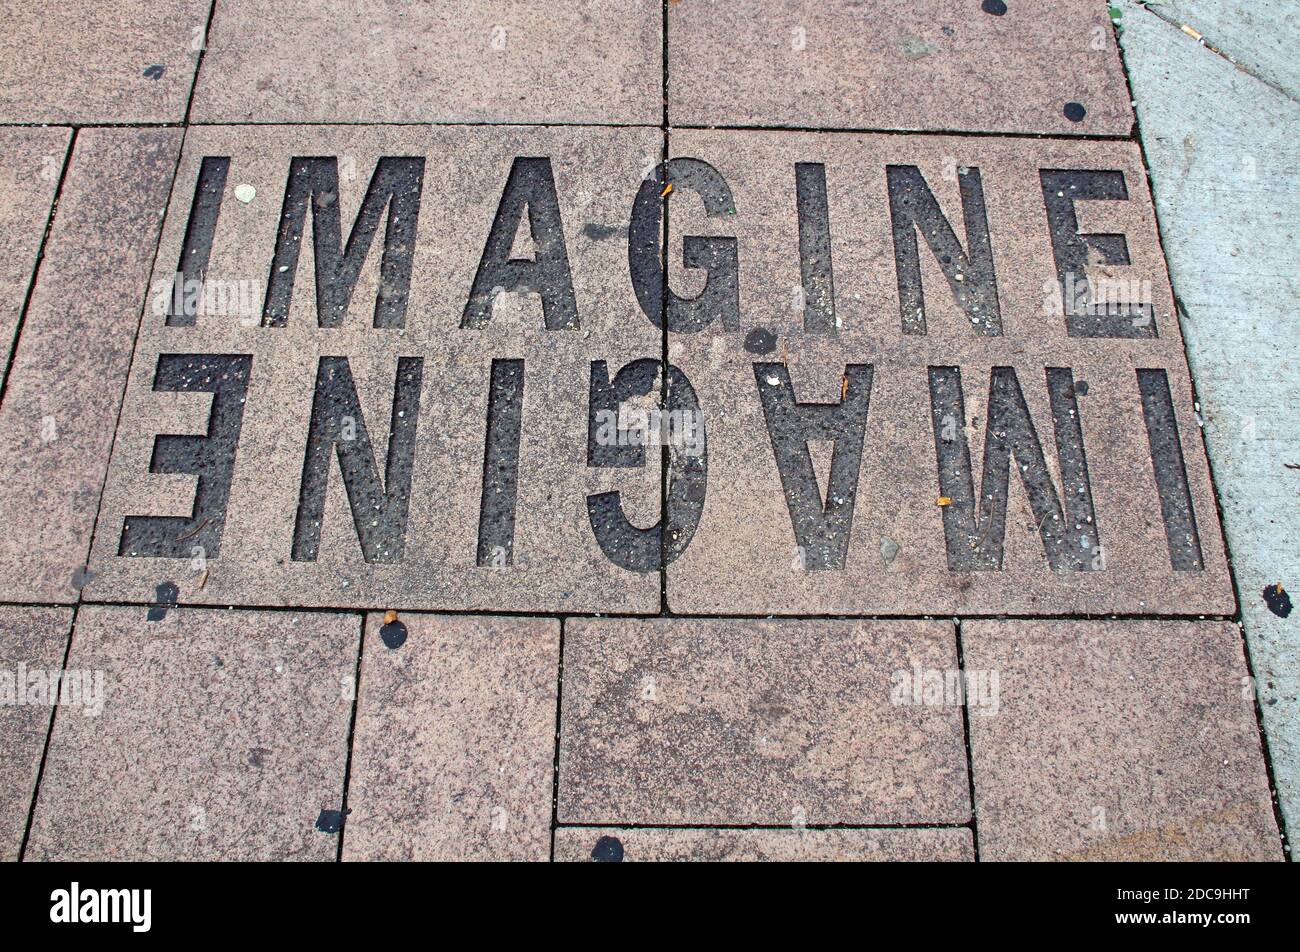 La parola "immagina" incisa in un marciapiede di Chicago. Foto Stock